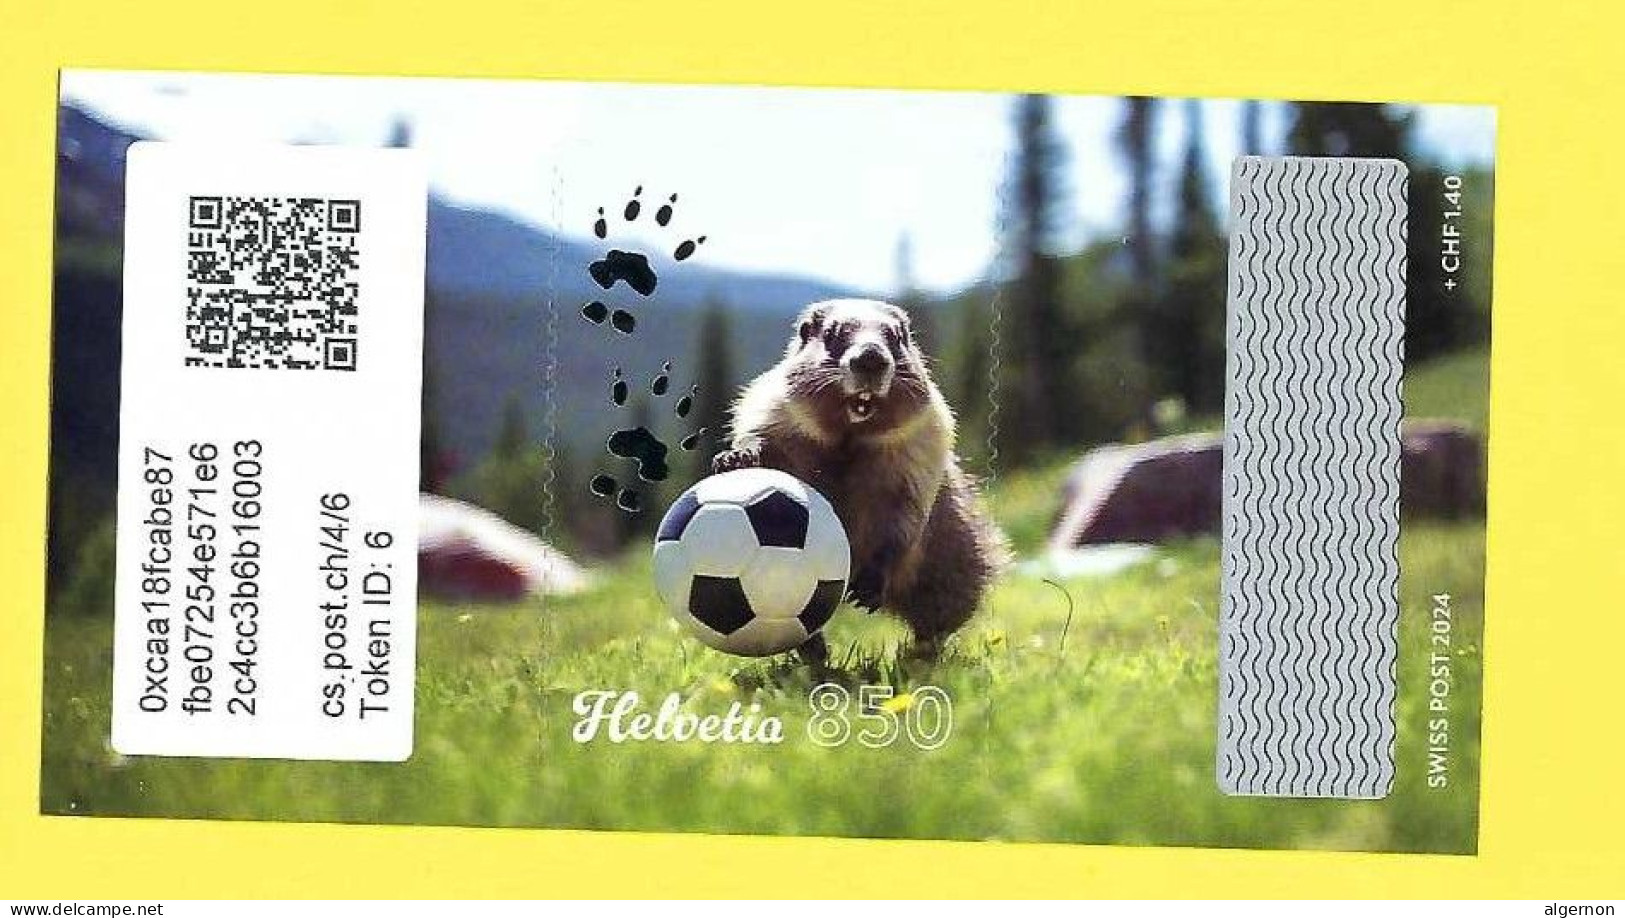 2024 Swiss Crypto Stamp 4.0 - ID 6 **   Marmotte Football Fussball Calcio Tirage 7500 Exemplaires ! - Ongebruikt